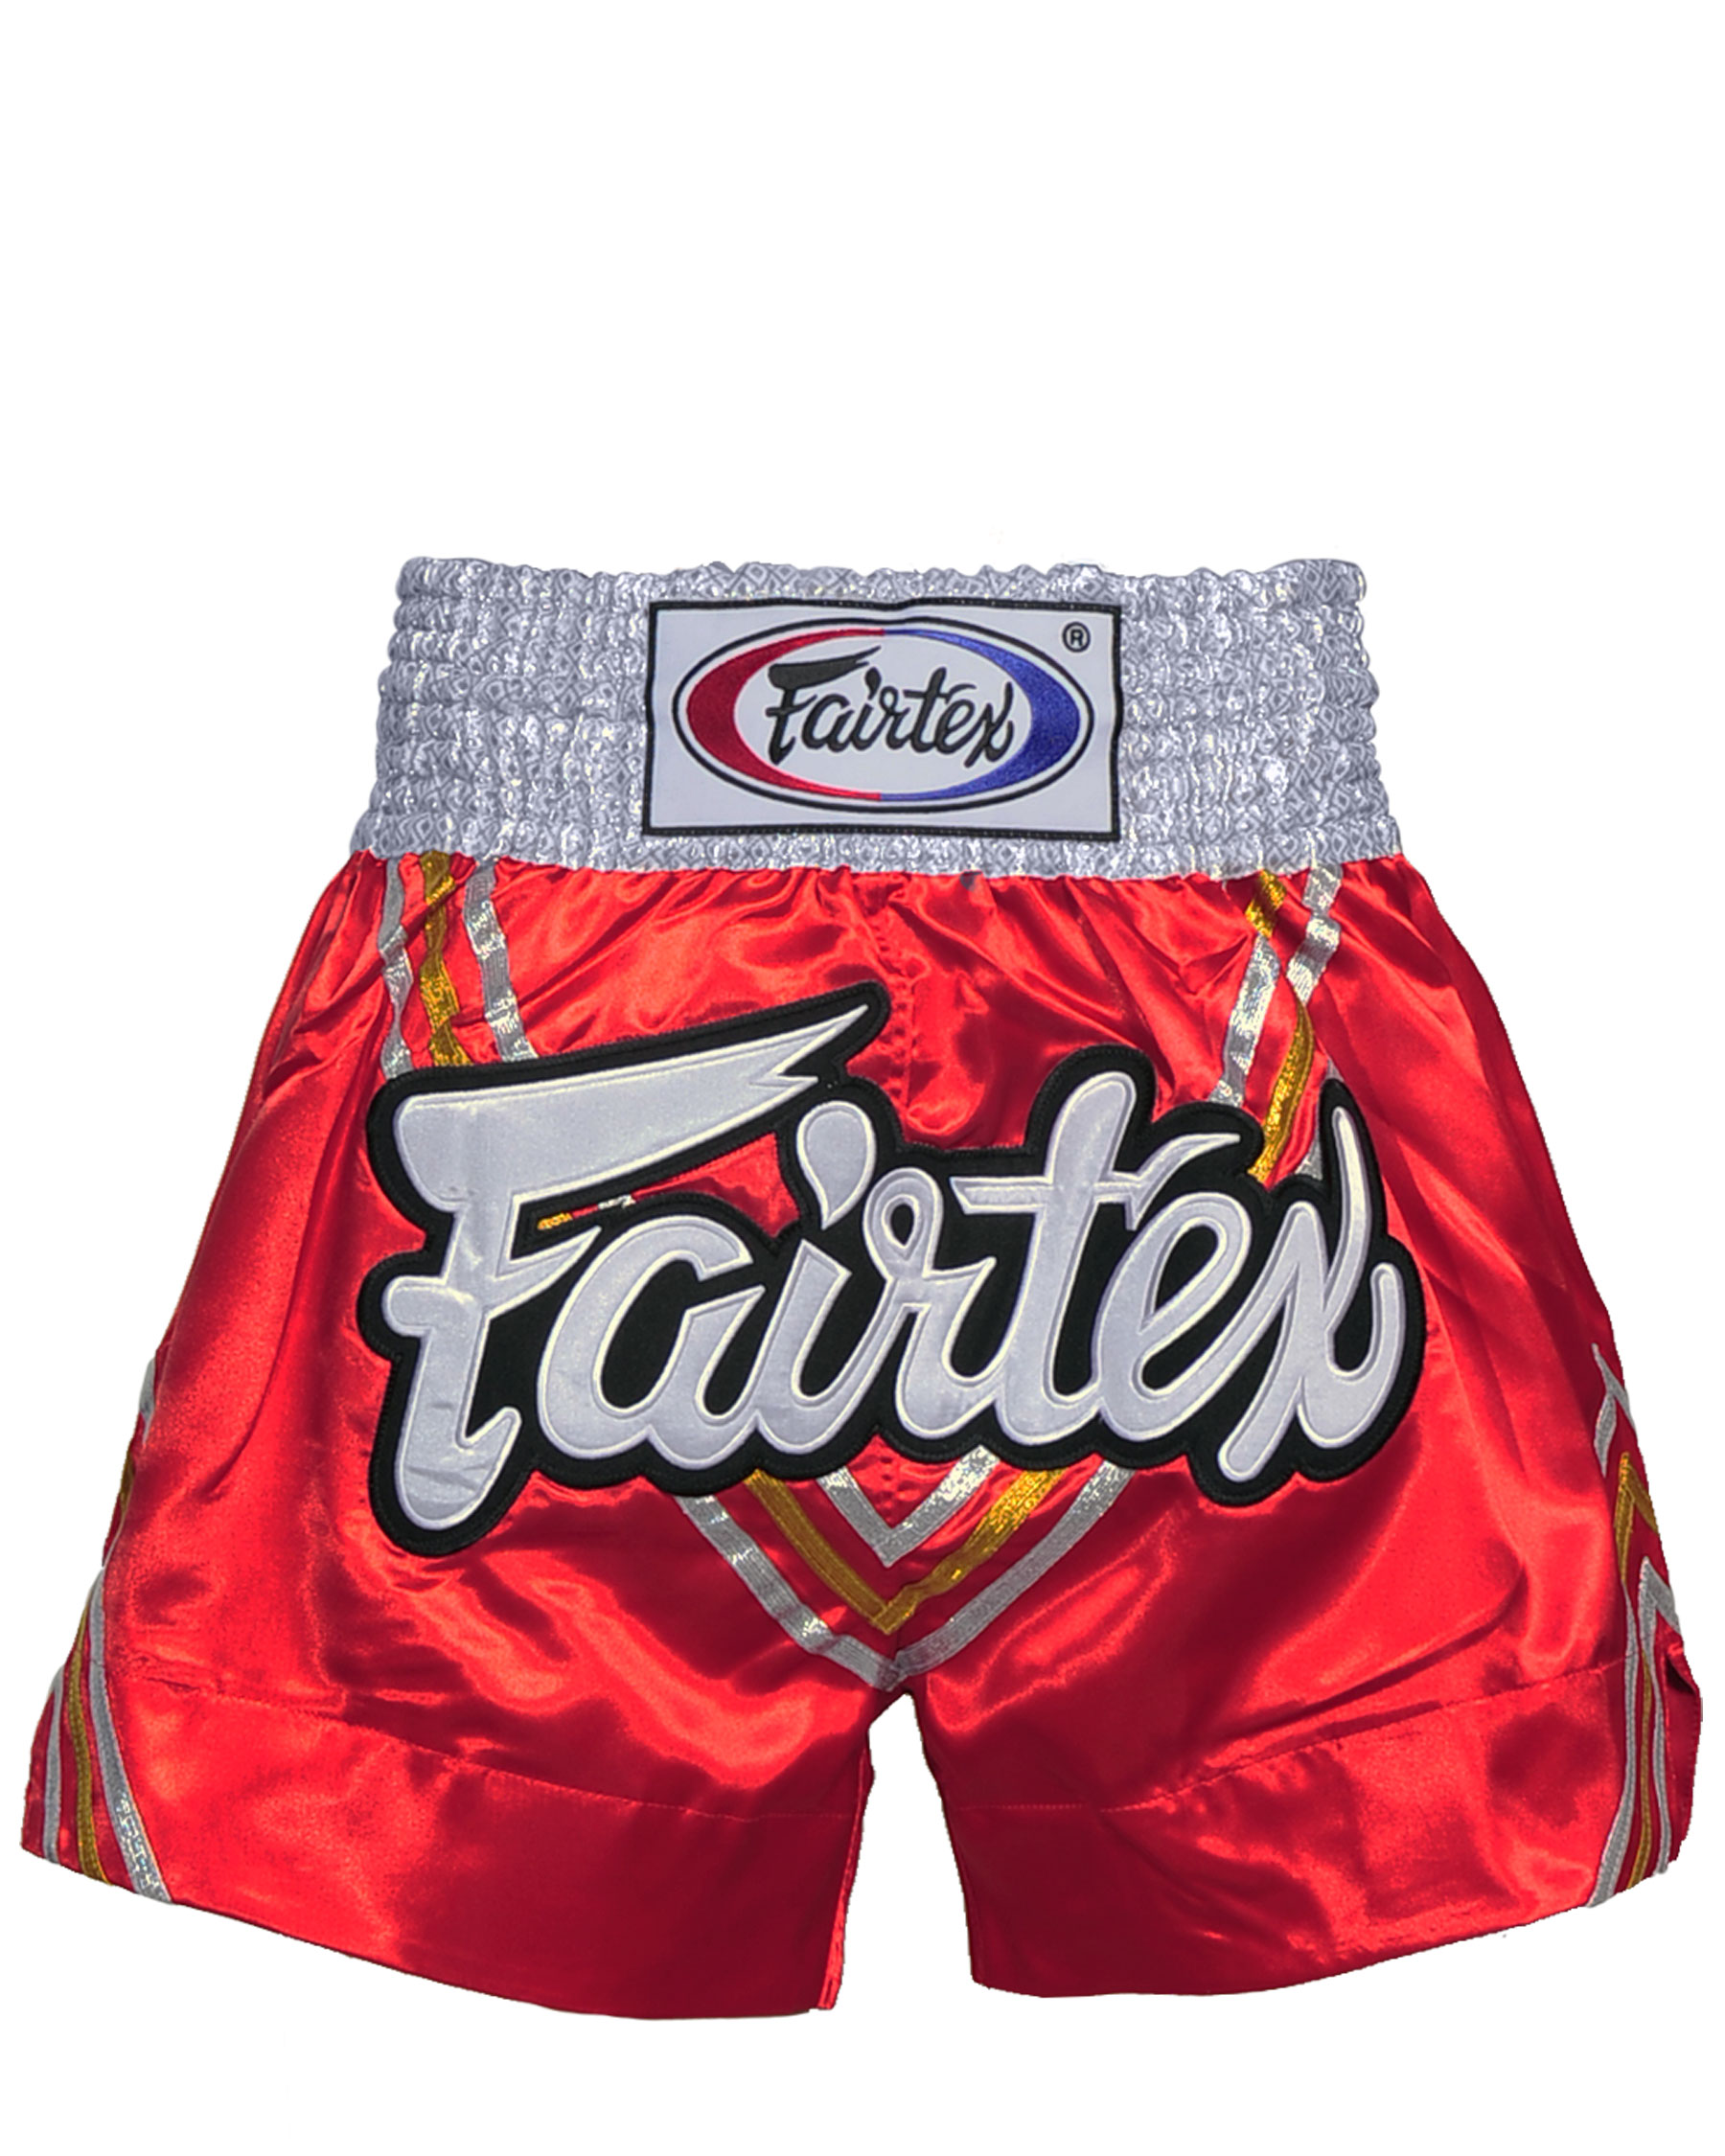 Fairtex Muay Thai short Triangle - Boxing trunks and ringwear - Fairtex,  Muay Thai and MMA Shop